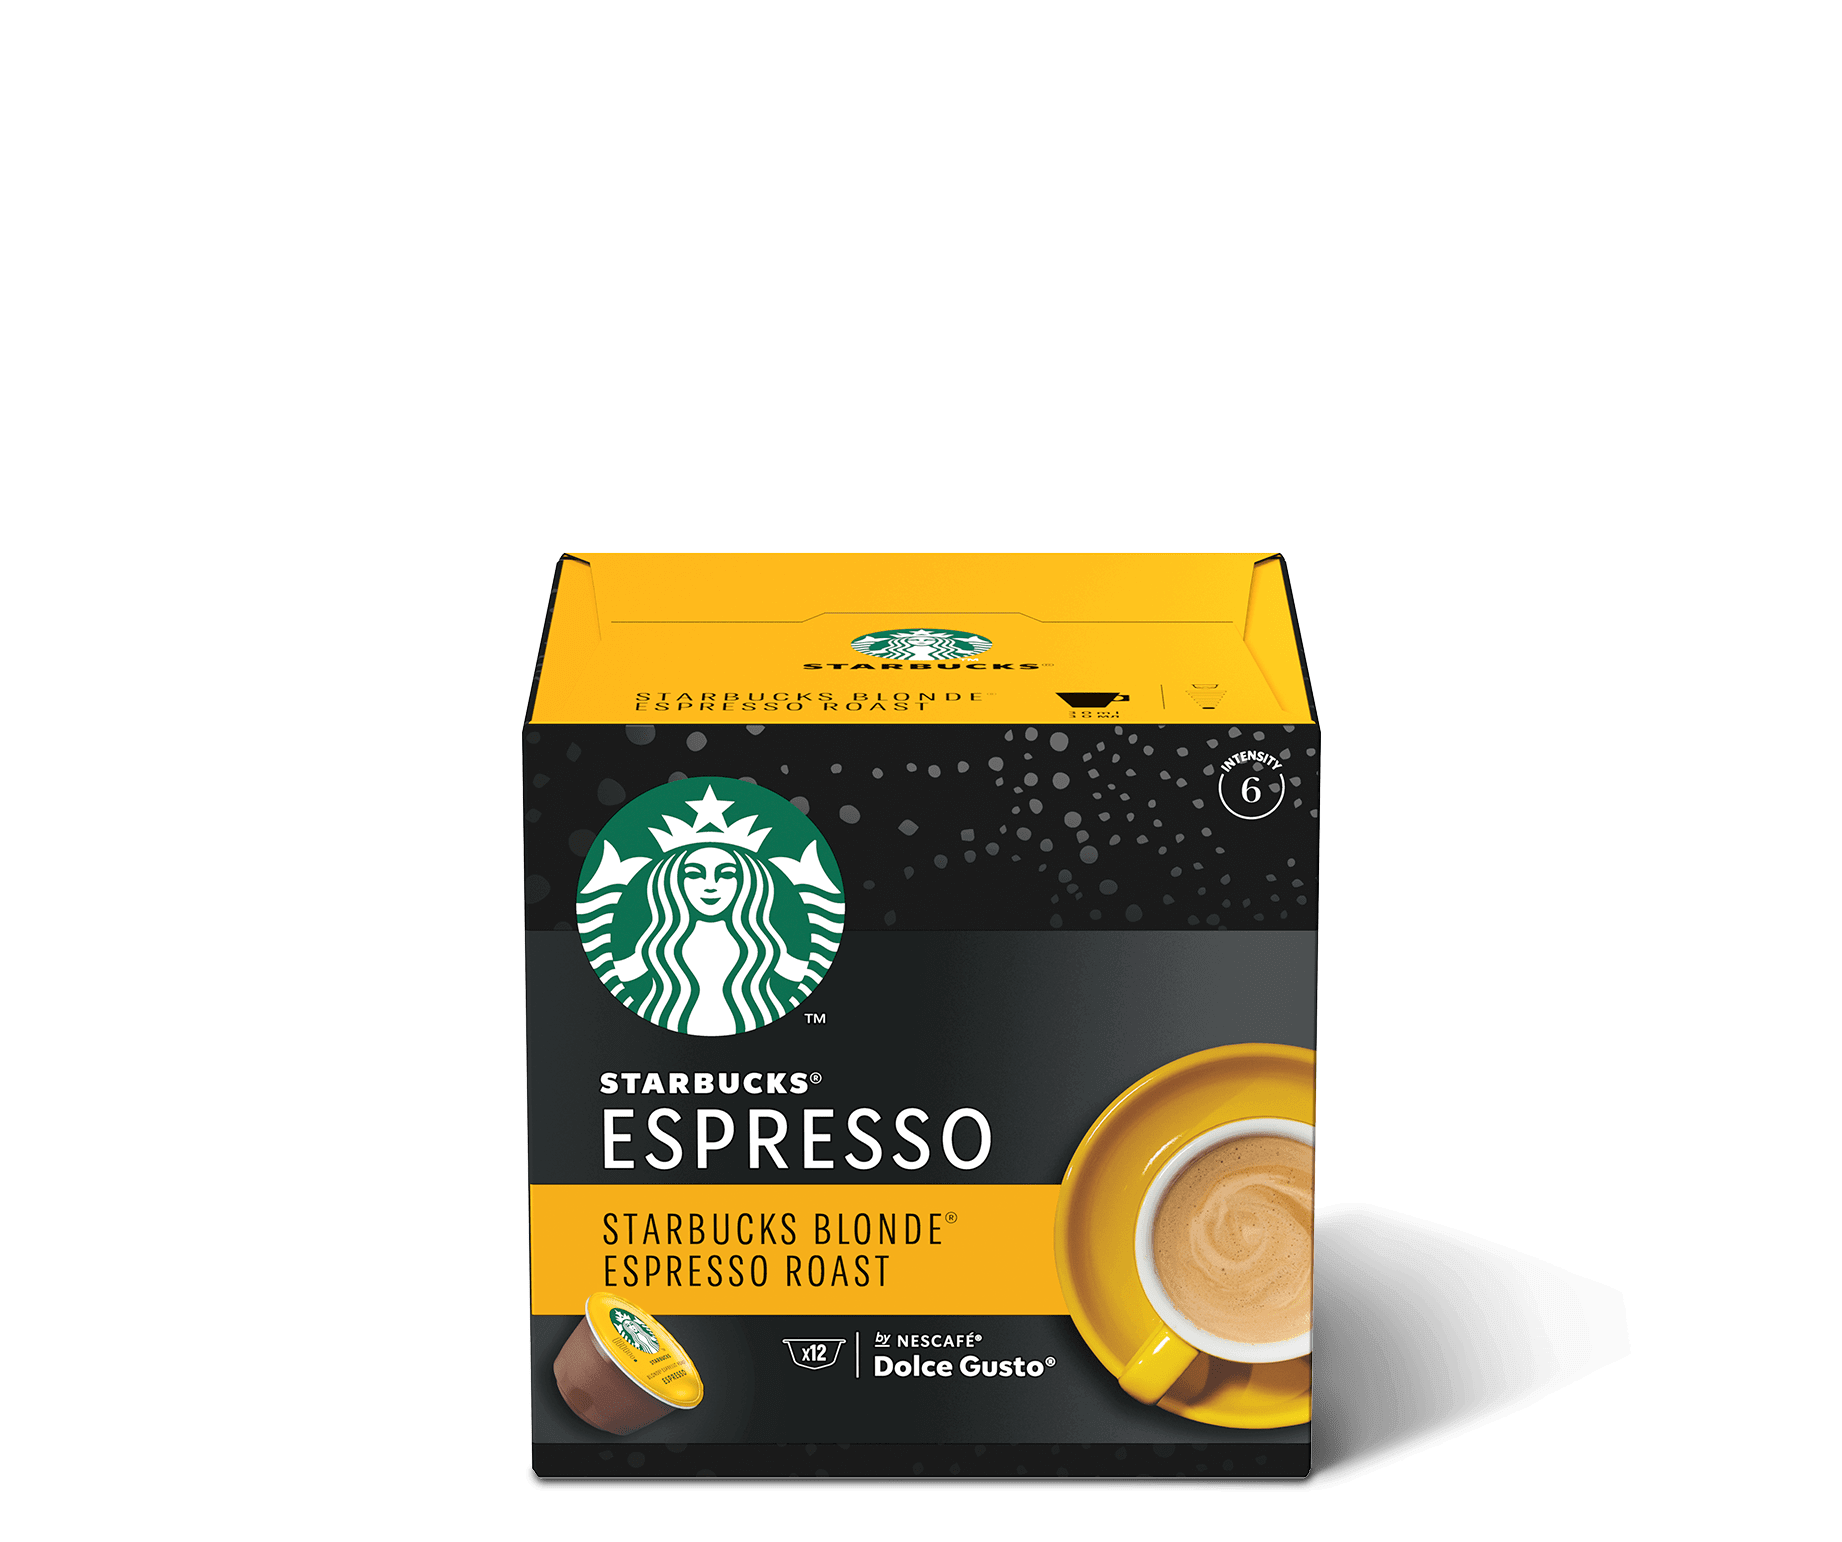 Café en grain Starbucks Blonde Espresso Roast 450 g